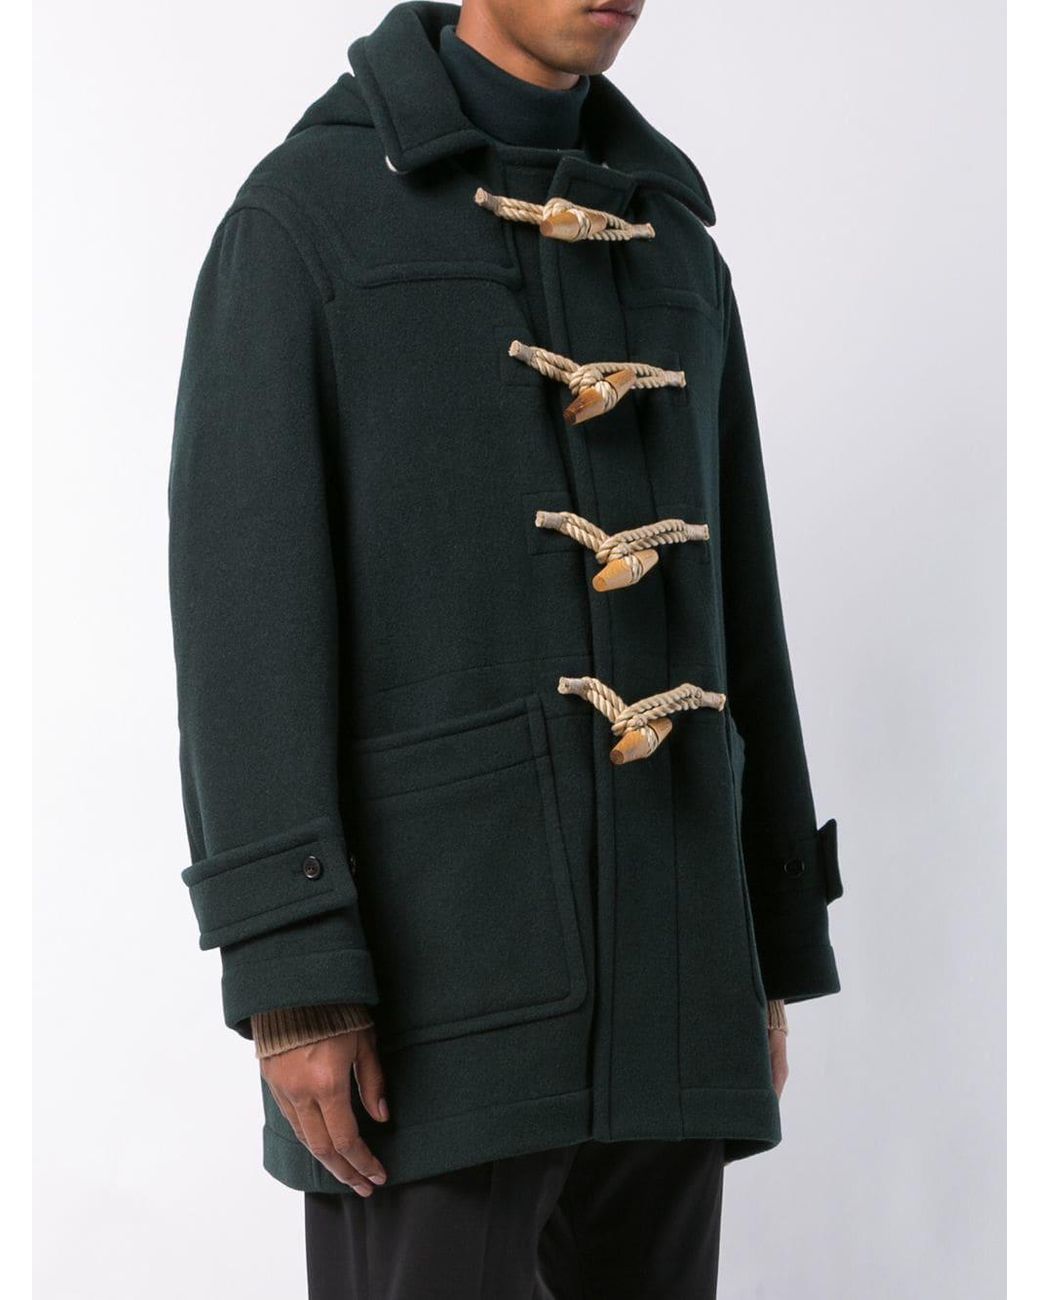 Gosha Rubchinskiy X Burberry Duffle Coat in Green for Men   Lyst